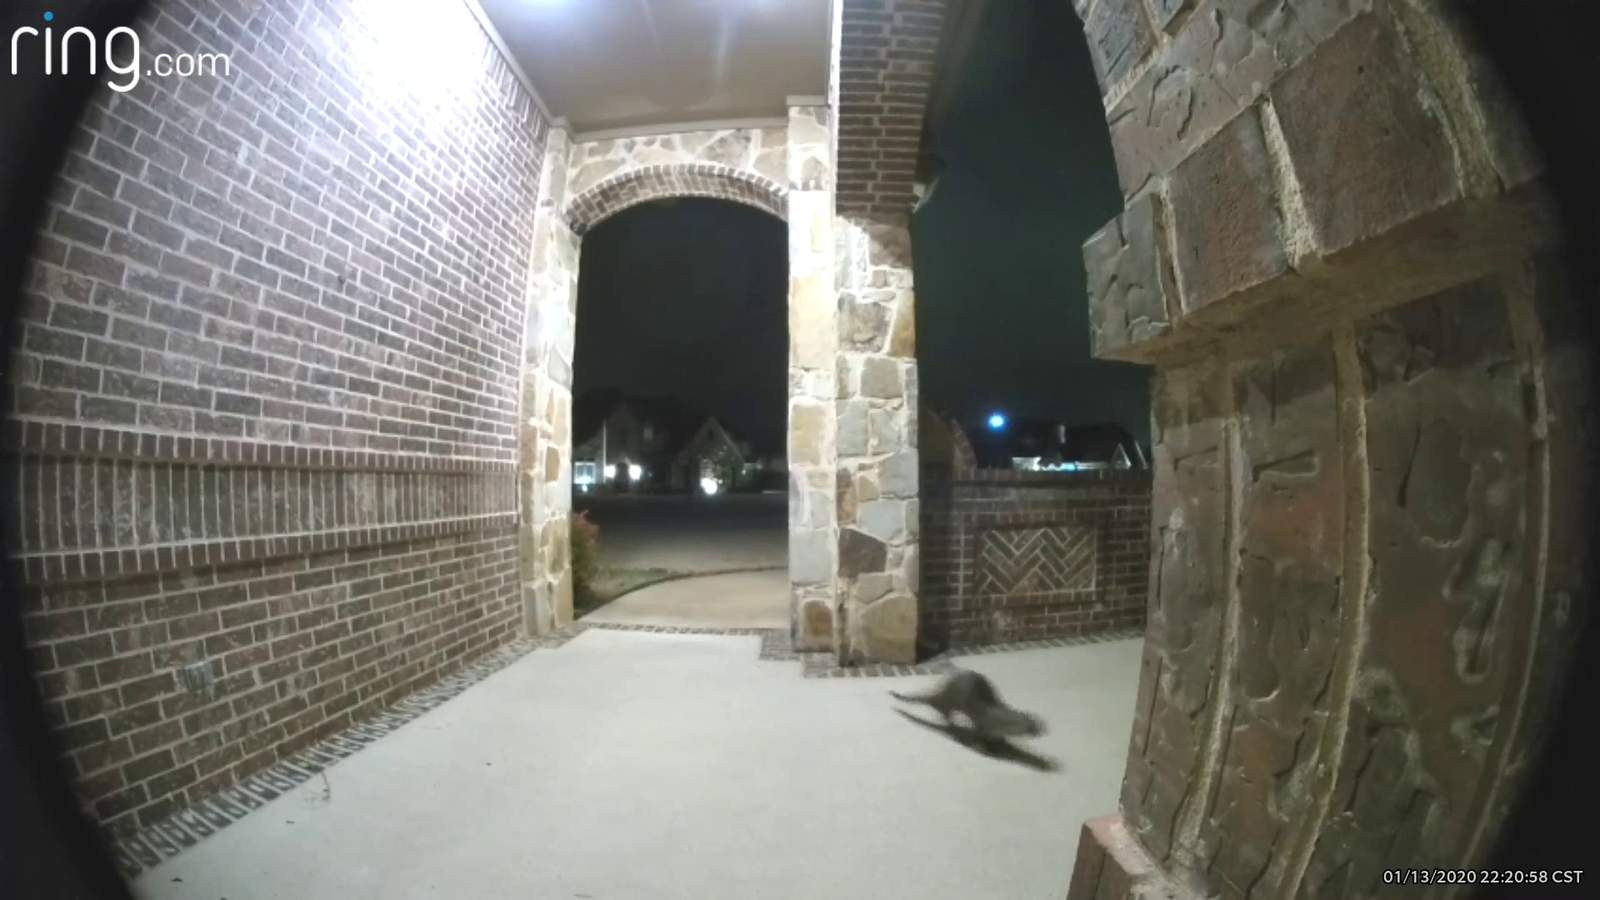 Caught on camera: Doorbell video captures otter